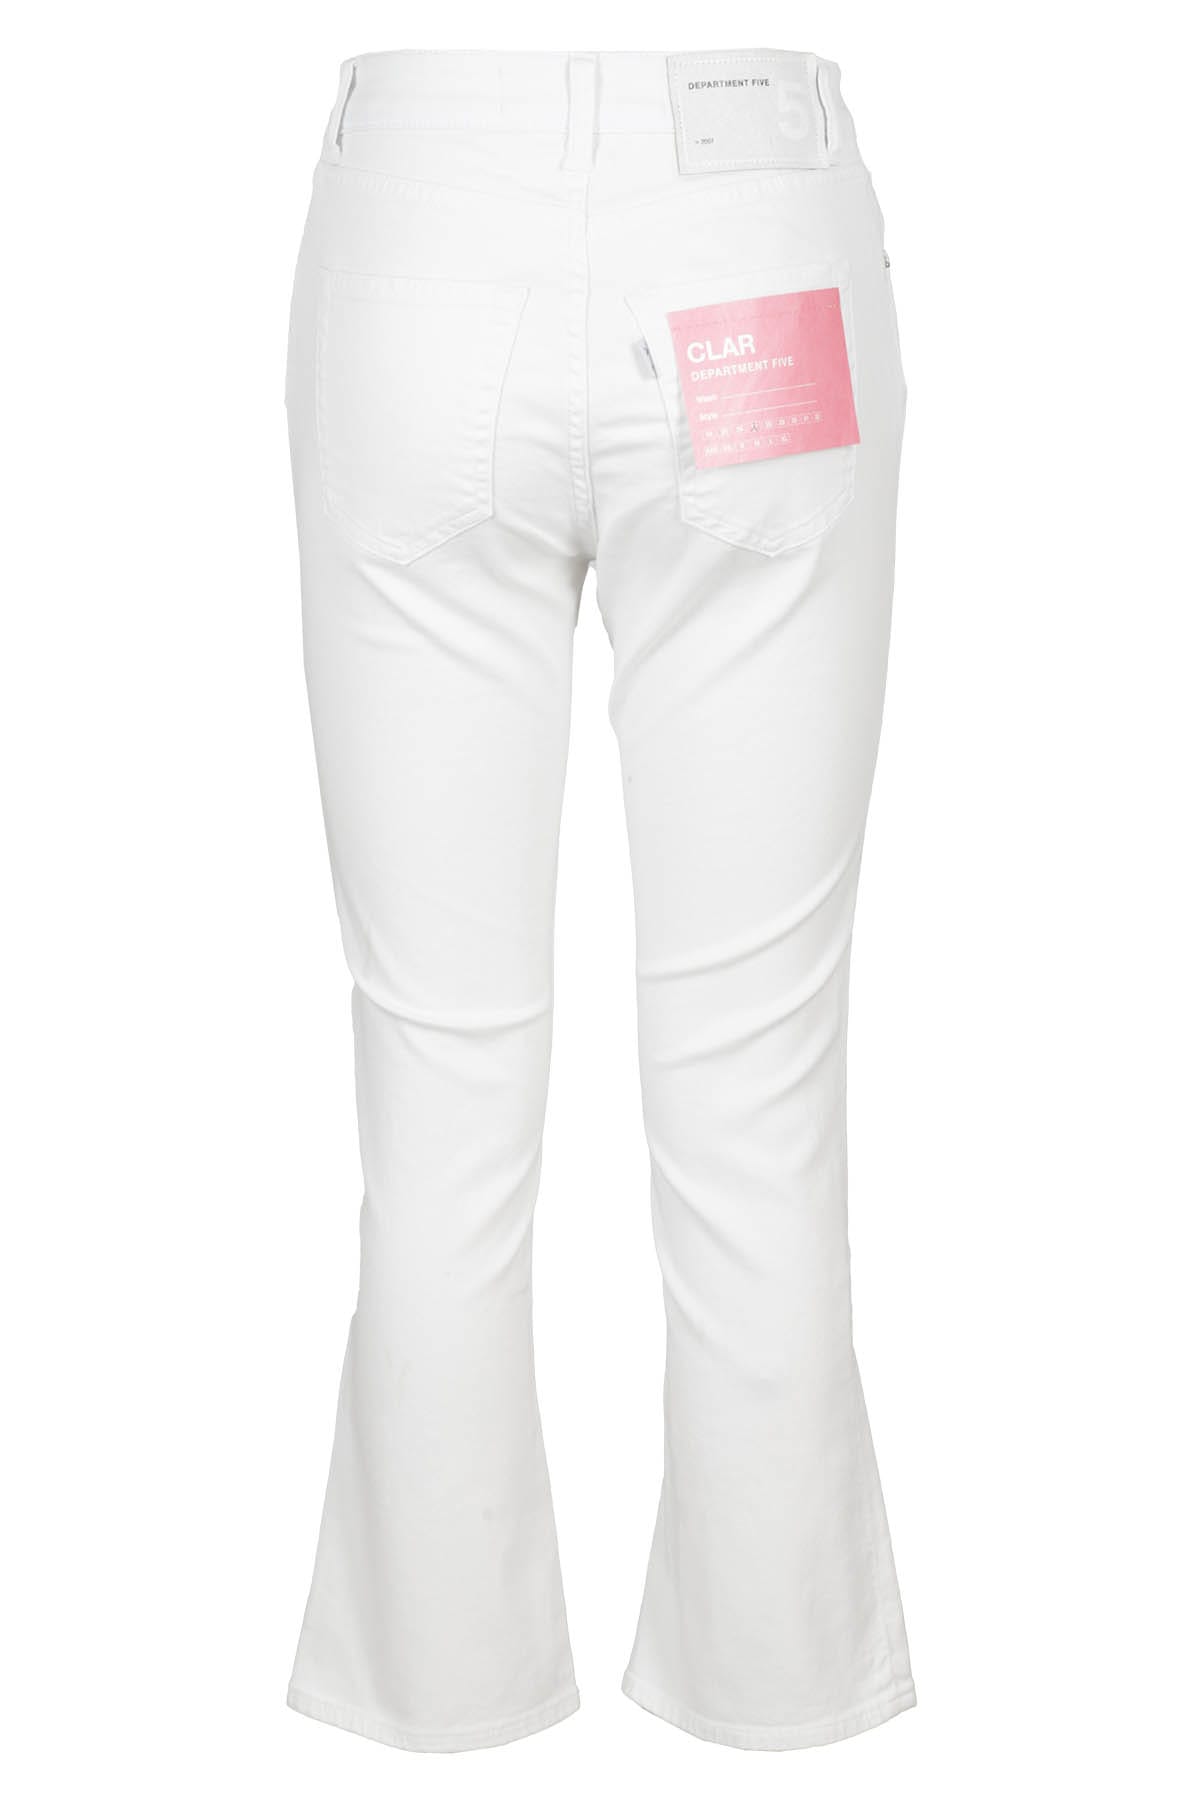 Shop Department Five Clar Pantalone In Bianco